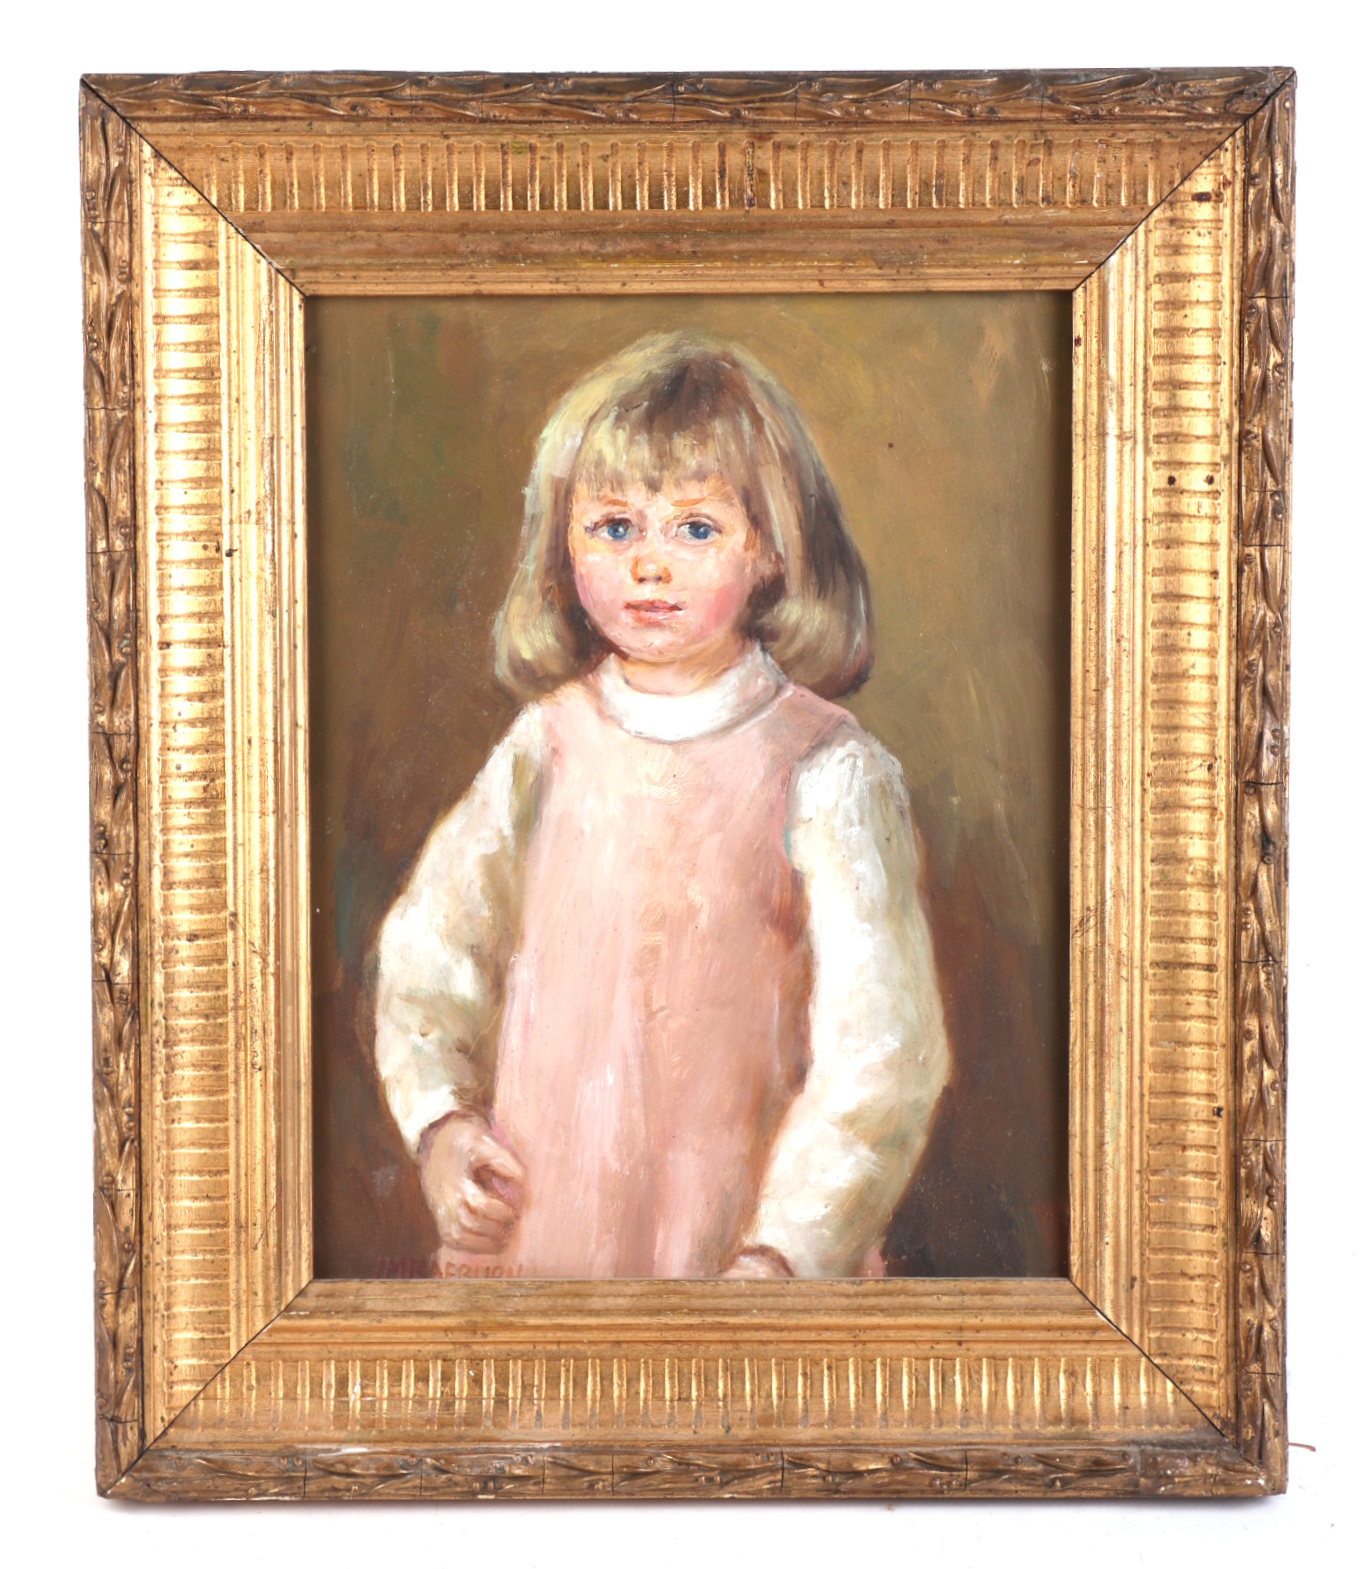 I M Raeburn (20th century school) - Portrait of a Young Girl - oil on board, framed, 17.5 by 23cms.